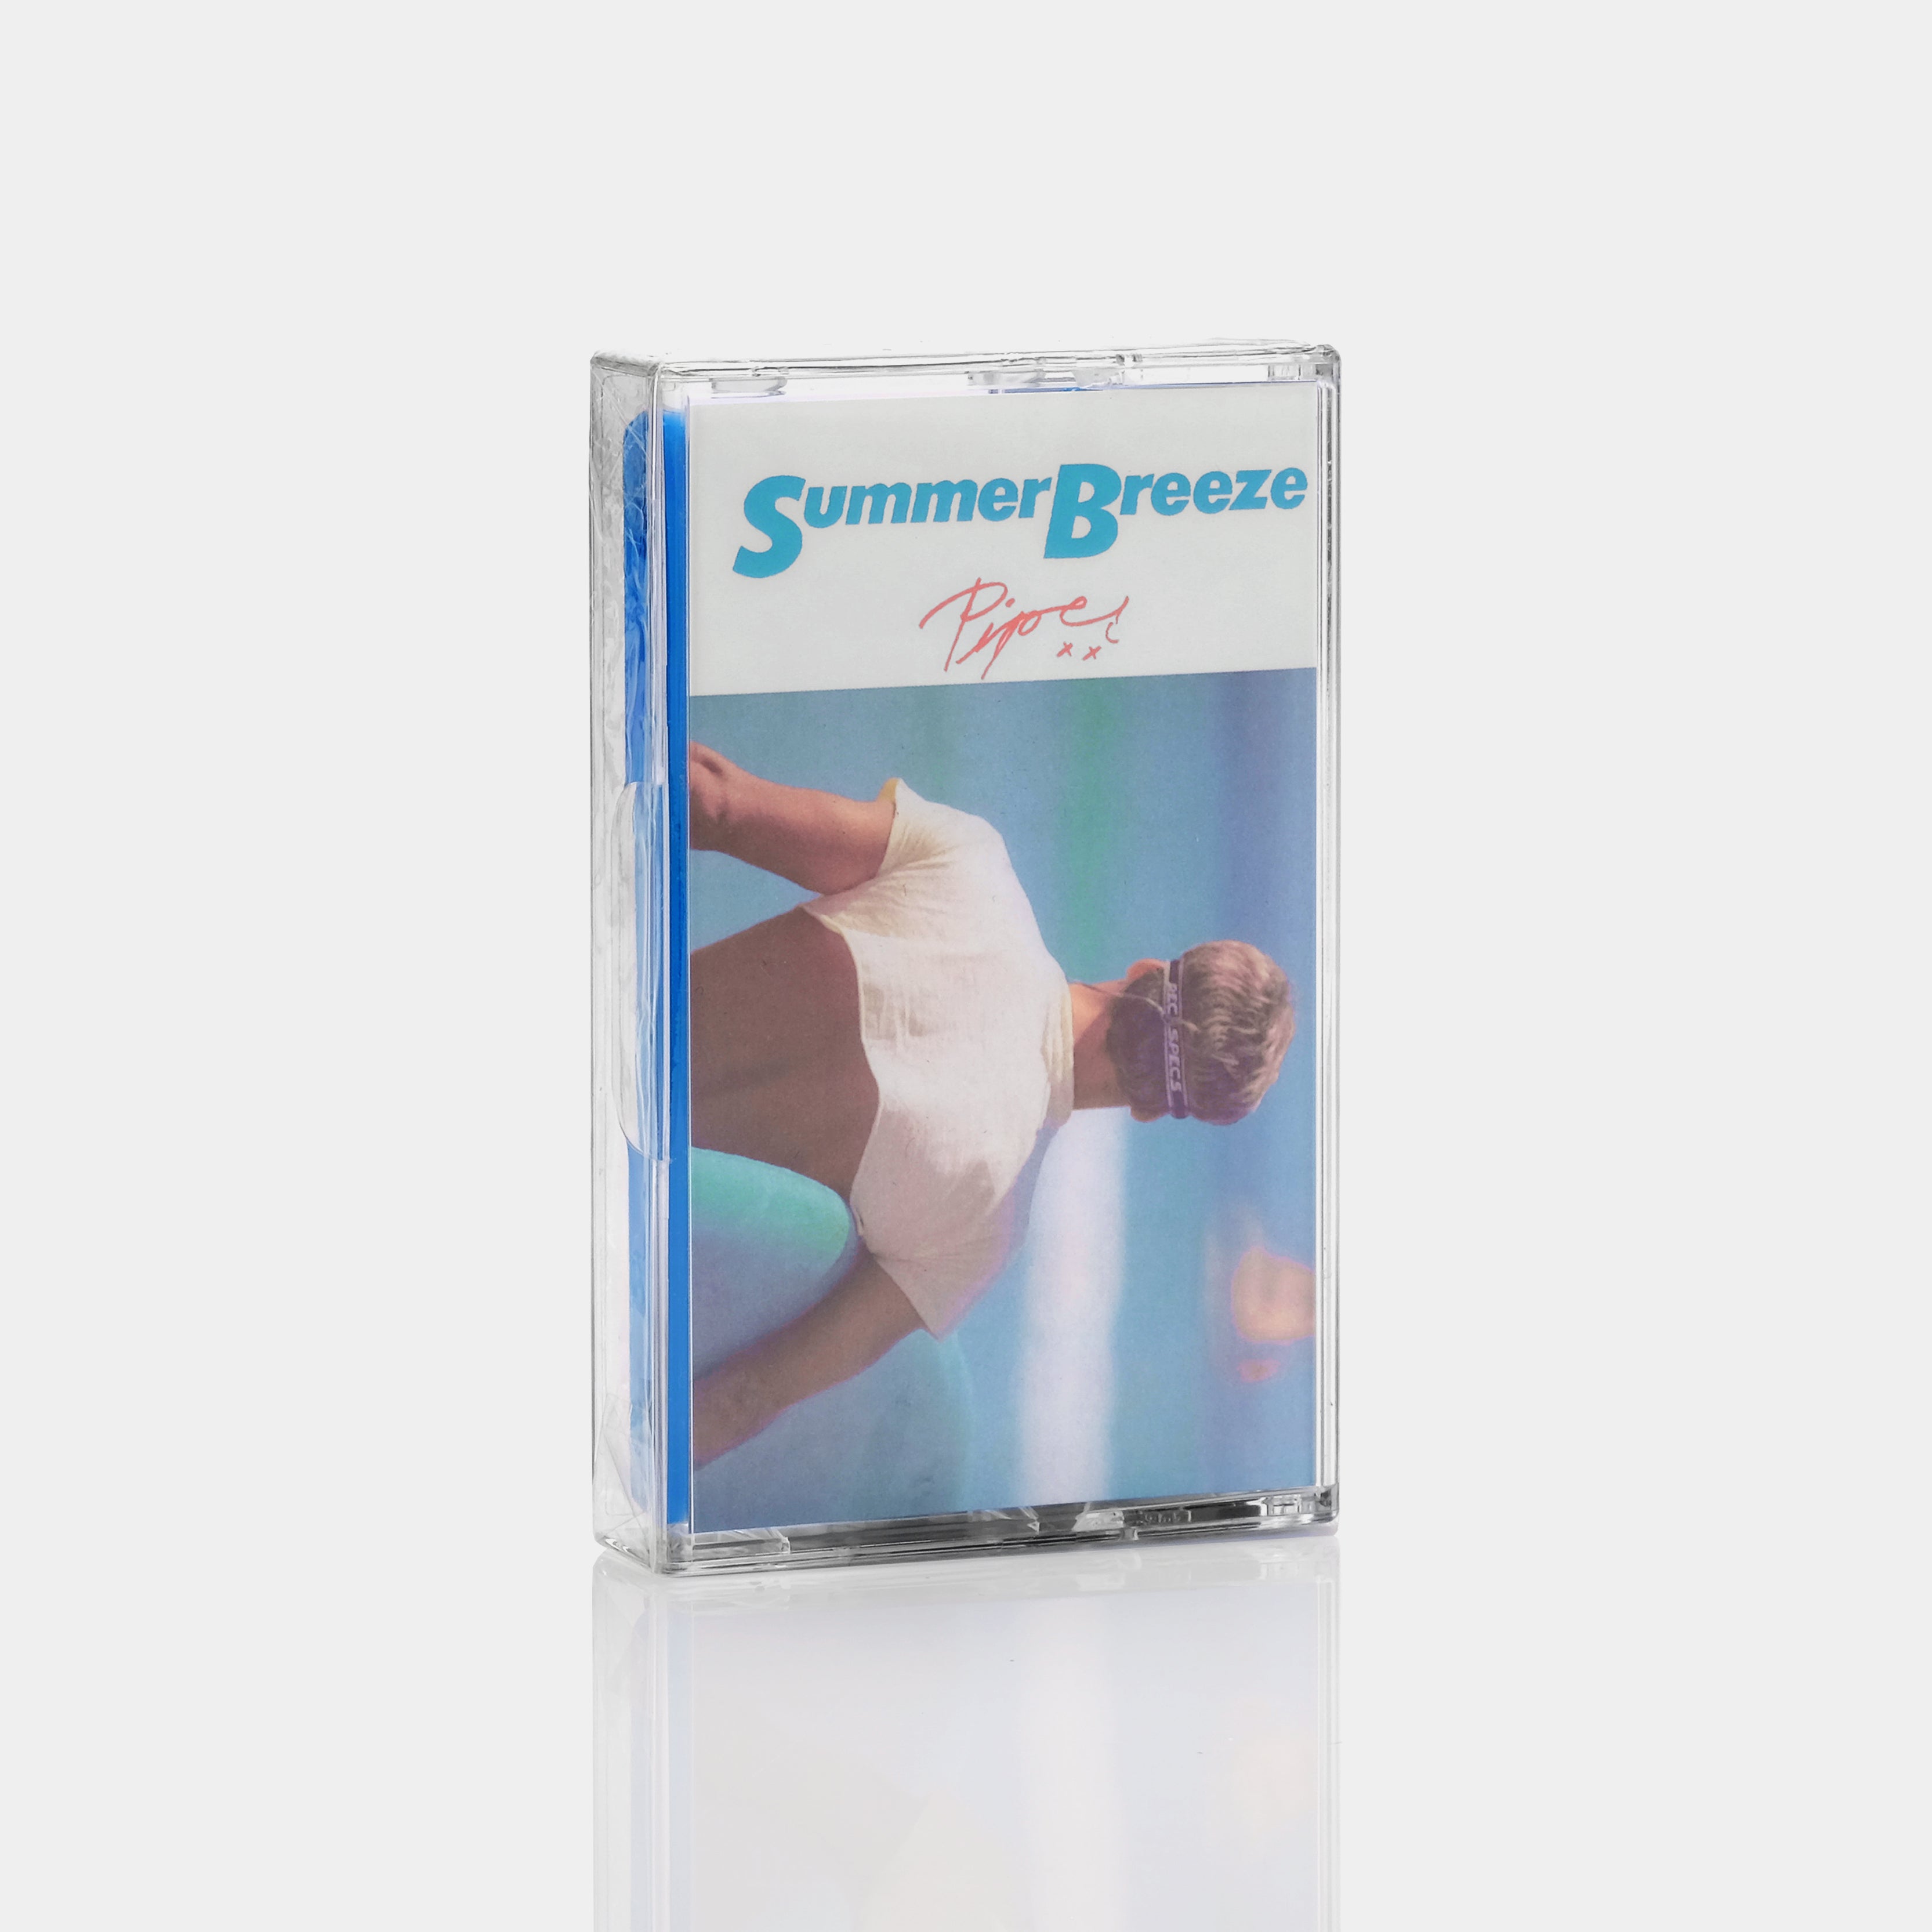 Piper - Summer Breeze Cassette Tape